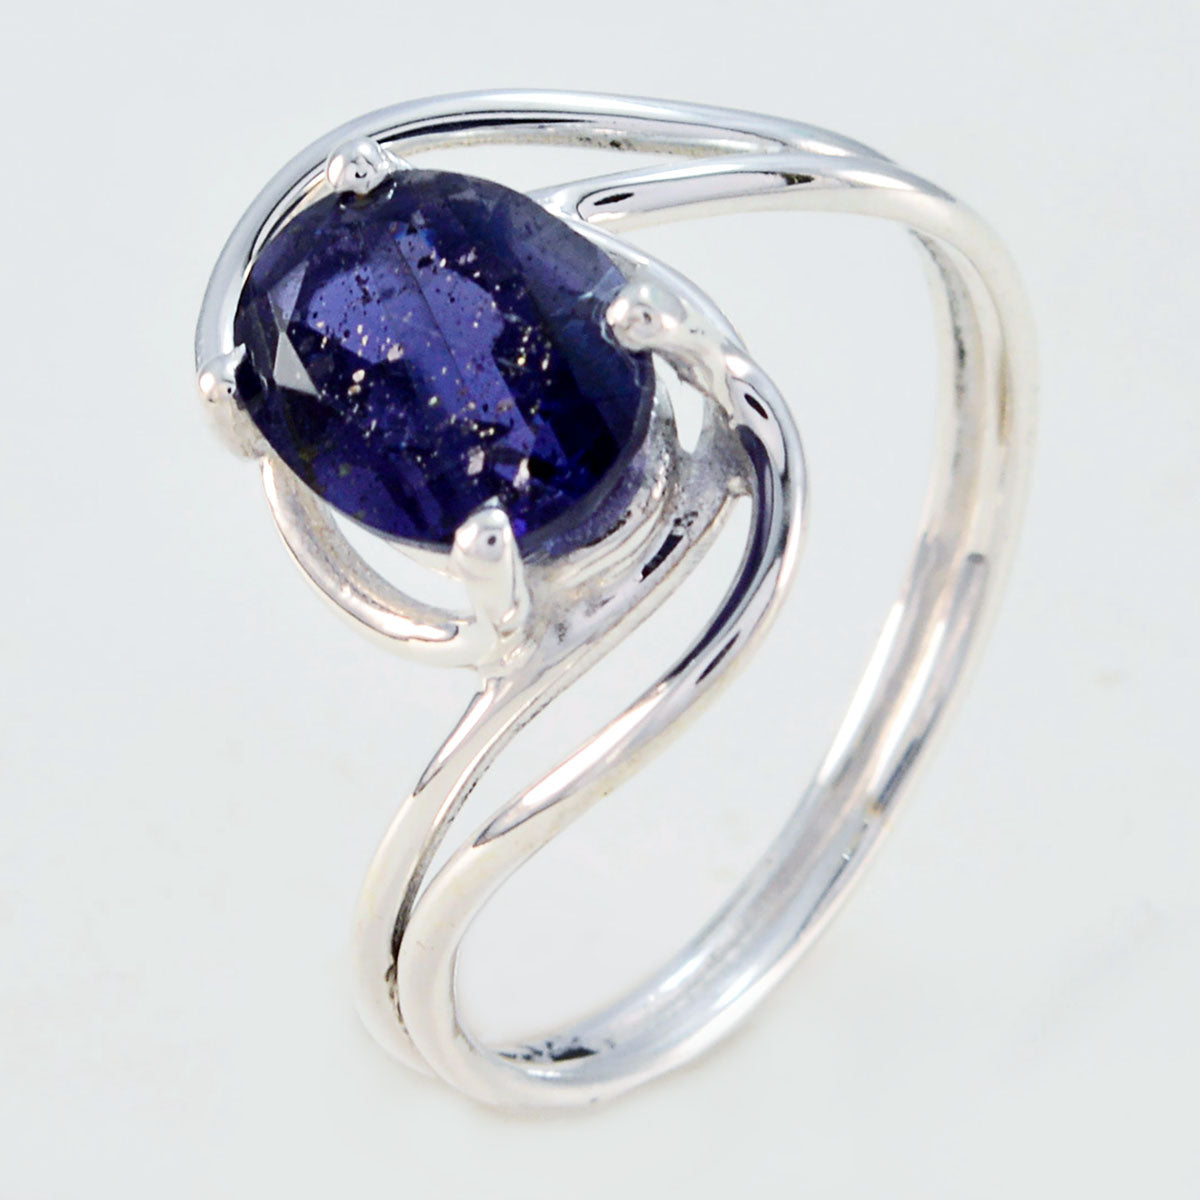 Riyo Handcrafted Gemstone Iolite 925 Sterling Silver Ring Knot